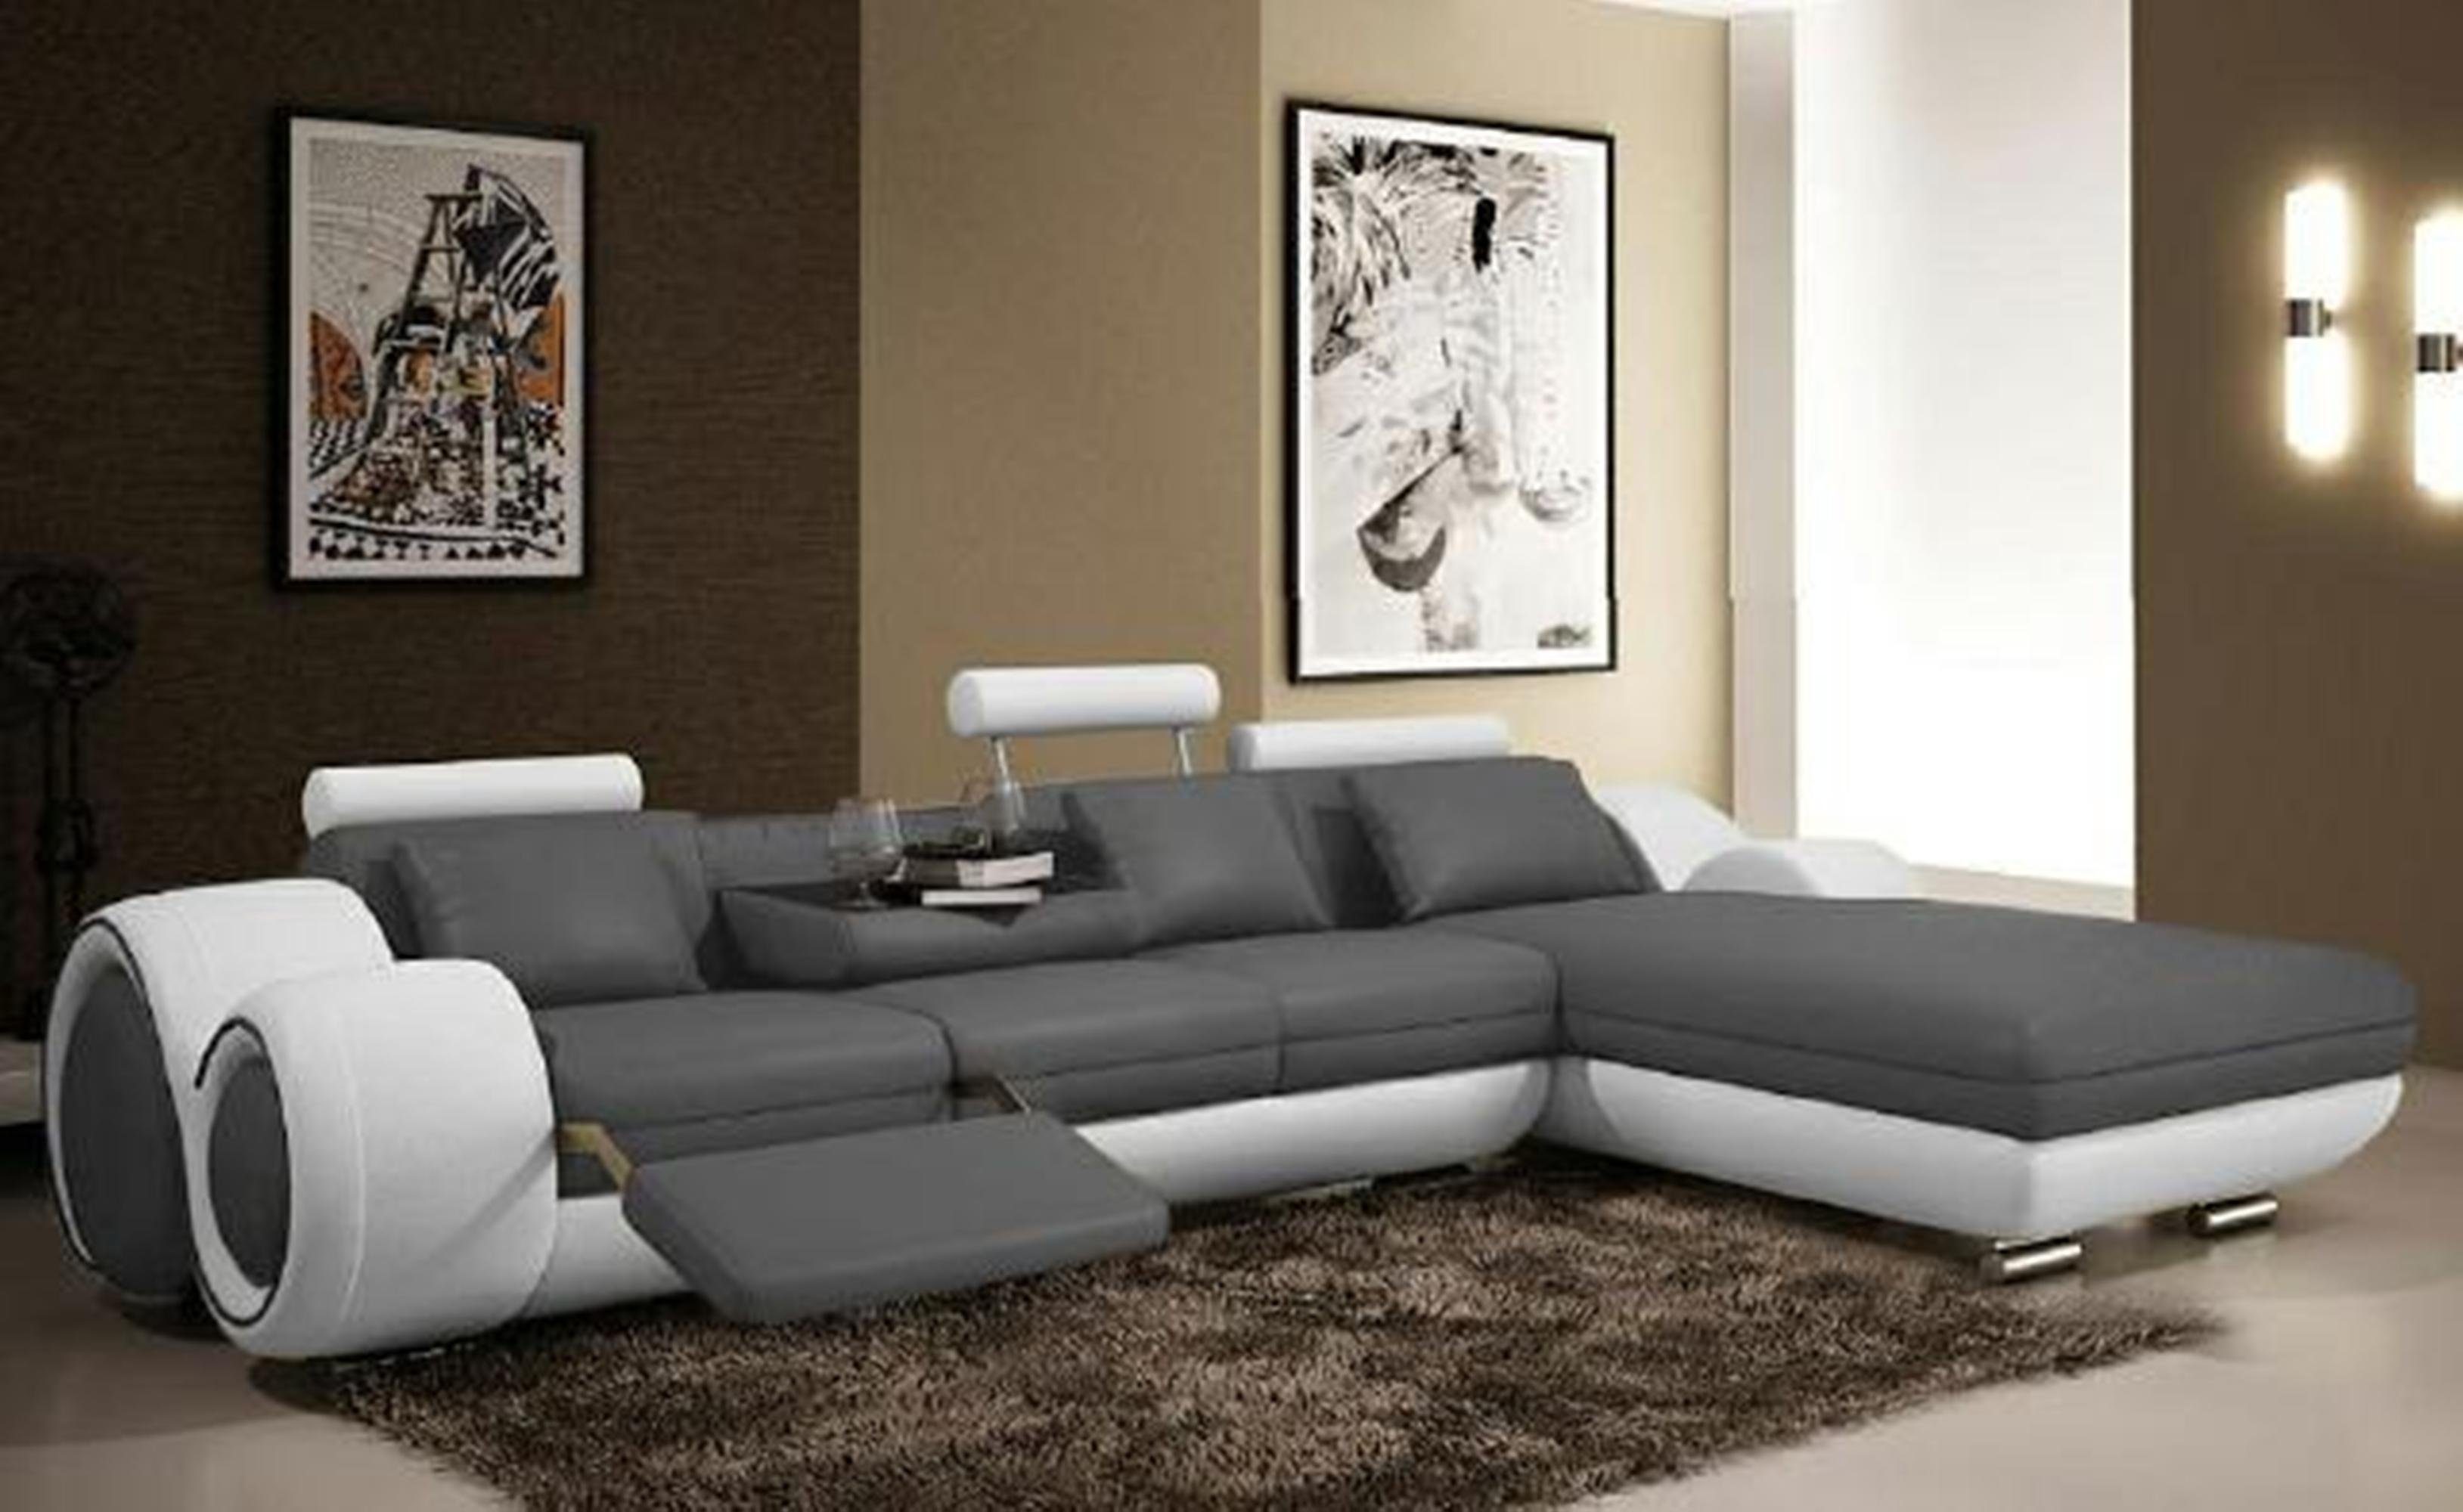 JVmoebel Ecksofa Modernes Ledersofa Ecksofa Wohnzimmer Couch Polster Sofa, Made in Europe Grau-weiß